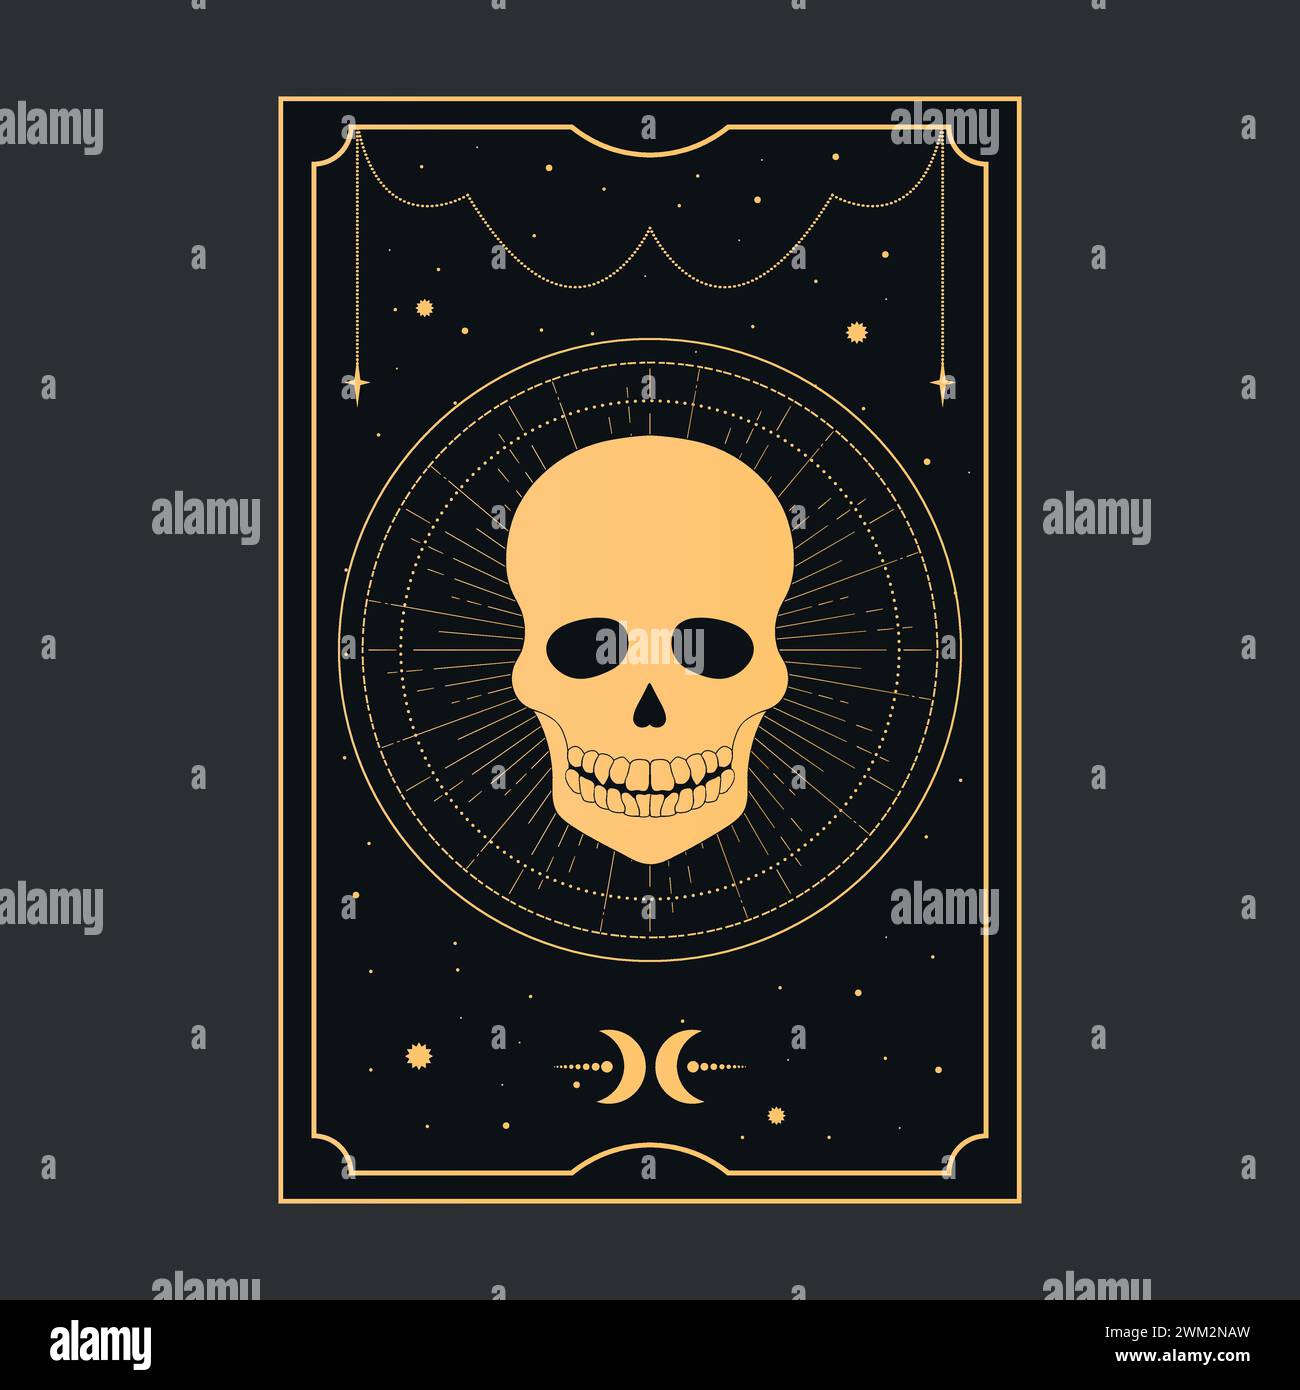 Golden Tarot card with a skull symbolizing Death. Tarot symbolism. Mystery, astrology, esoteric. Vector illustration Stock Vector